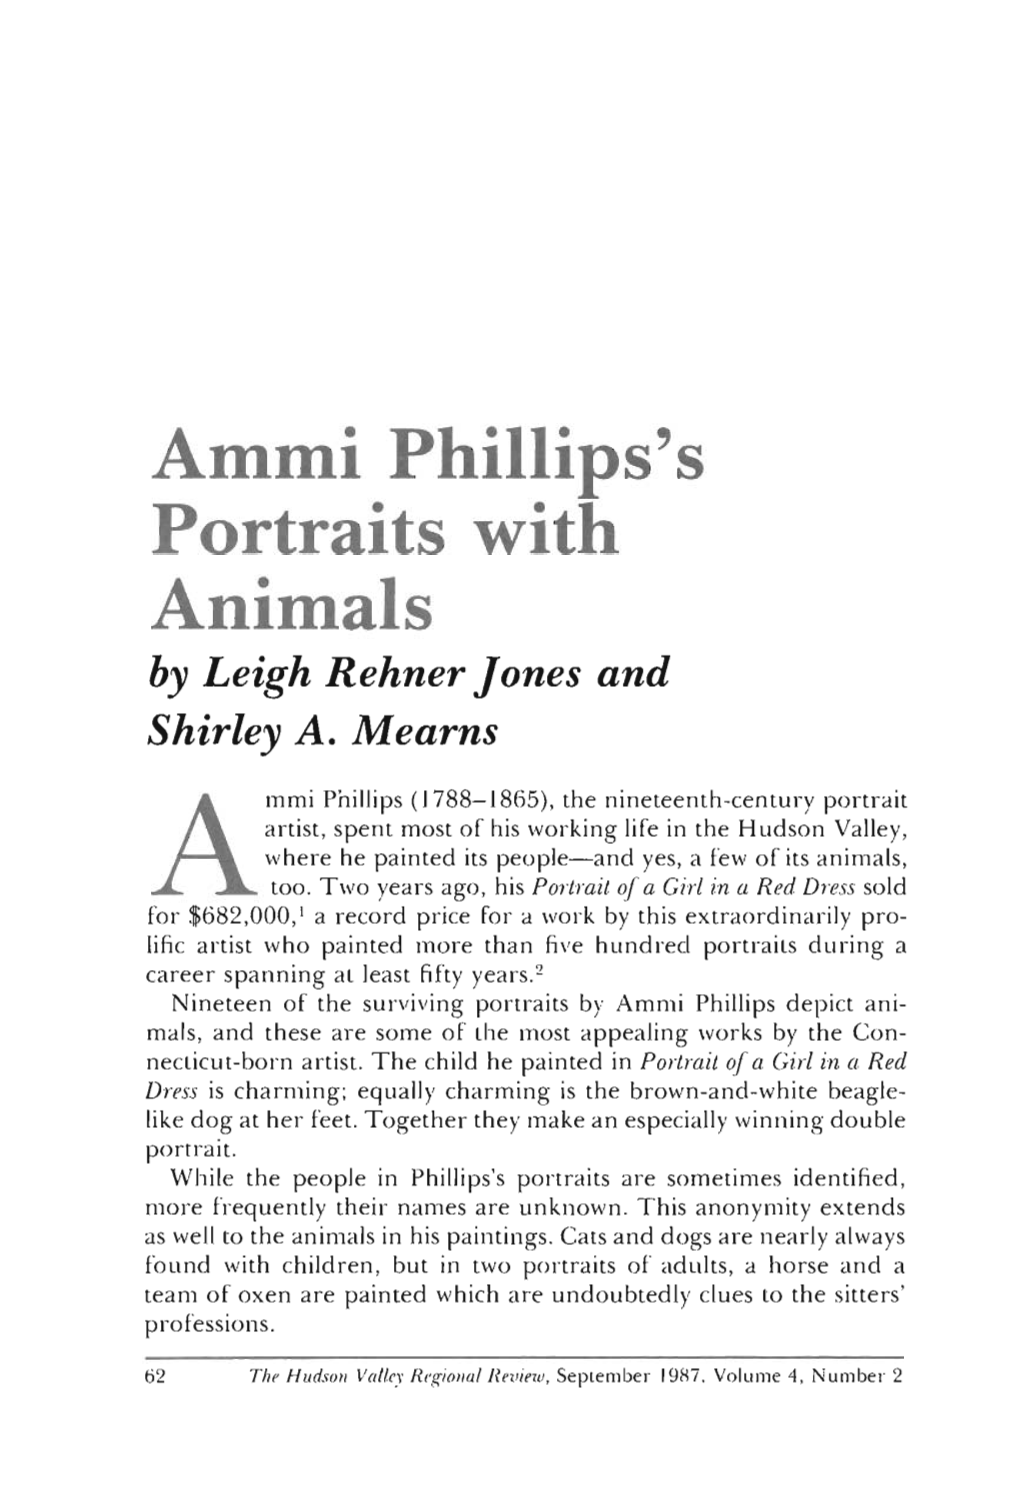 Ammi Phillips's Portraits with Animals